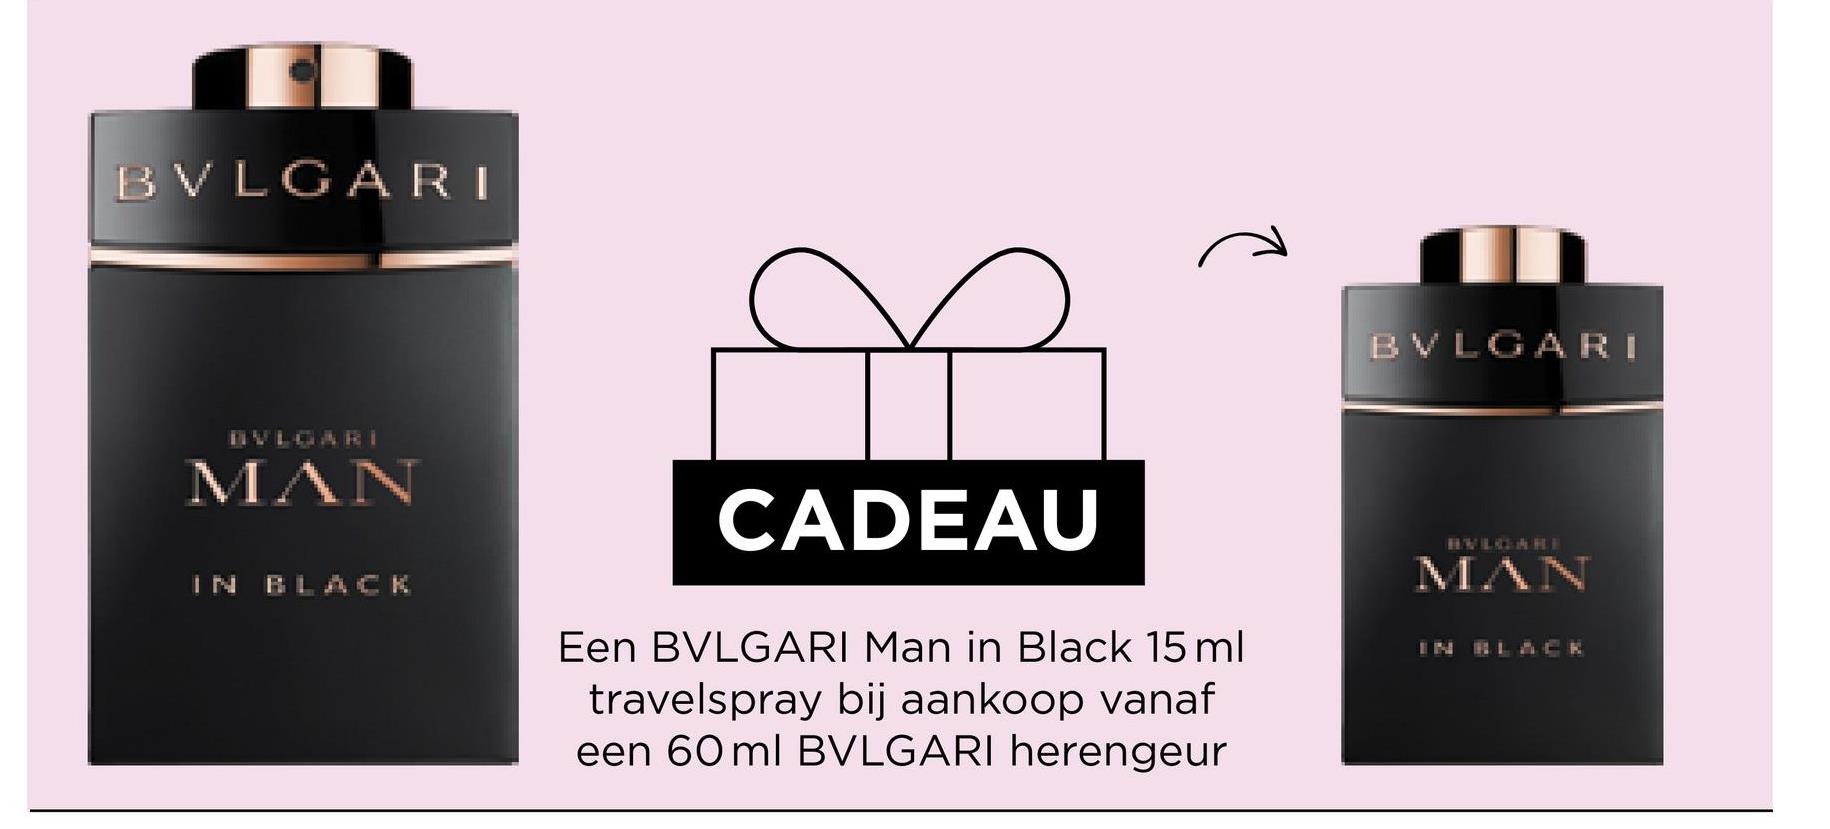 BVLGARI
BVLGARI
MAN
IN
BLACK
CADEAU
Een BVLGARI Man in Black 15 ml
travelspray bij aankoop vanaf
een 60 ml BVLGARI herengeur
BVLGARI
MAN